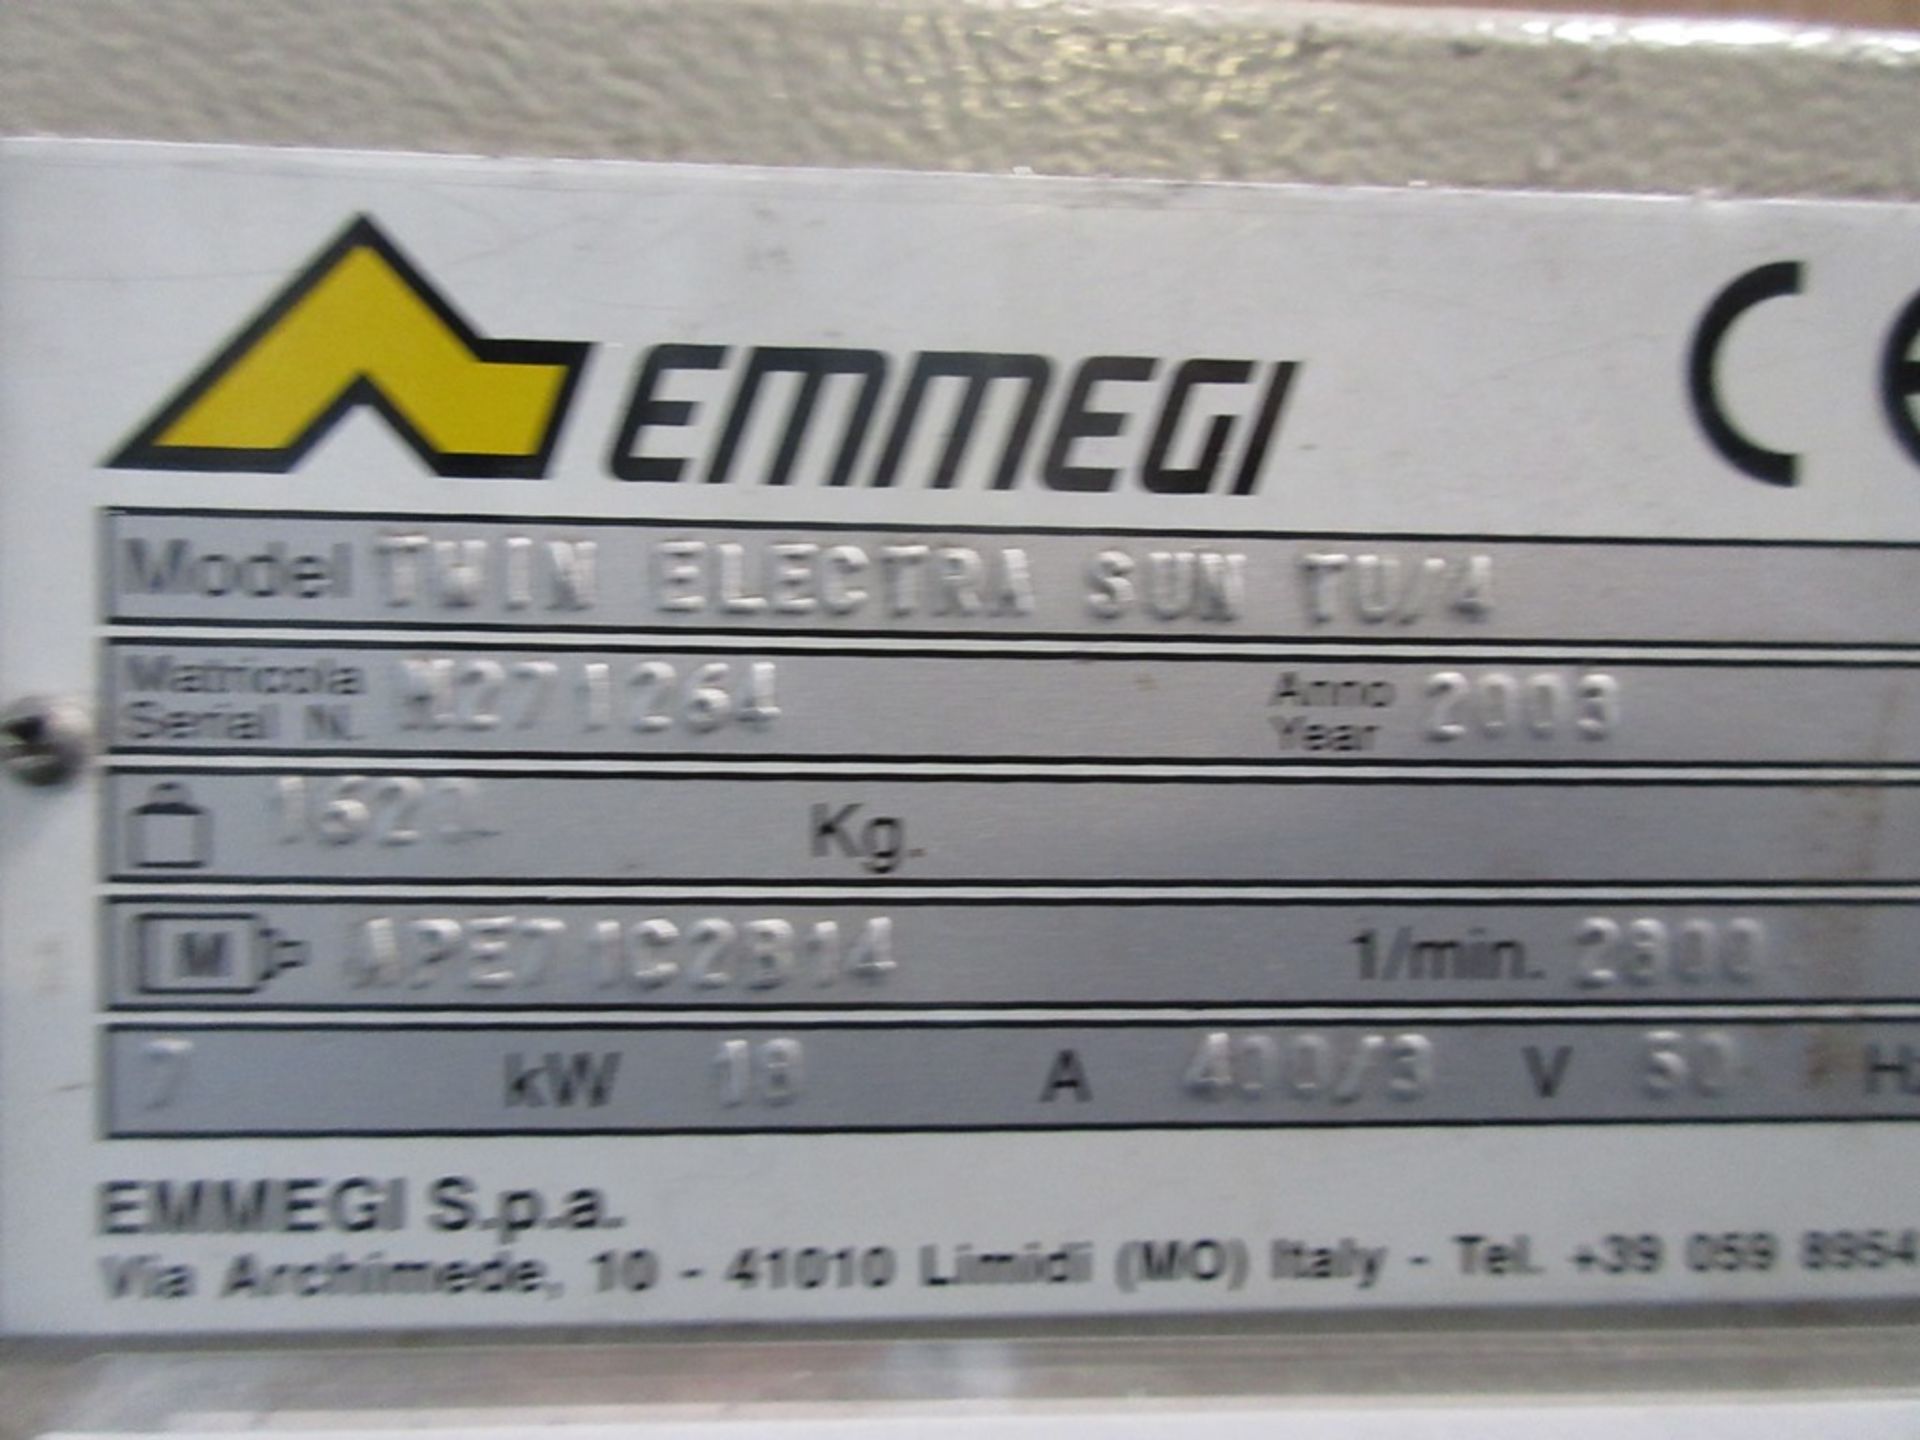 Emmegi twin head computerised cut off saw, model Twin Electra Sun TU/4, serial no M271264 (2003), - Image 6 of 10